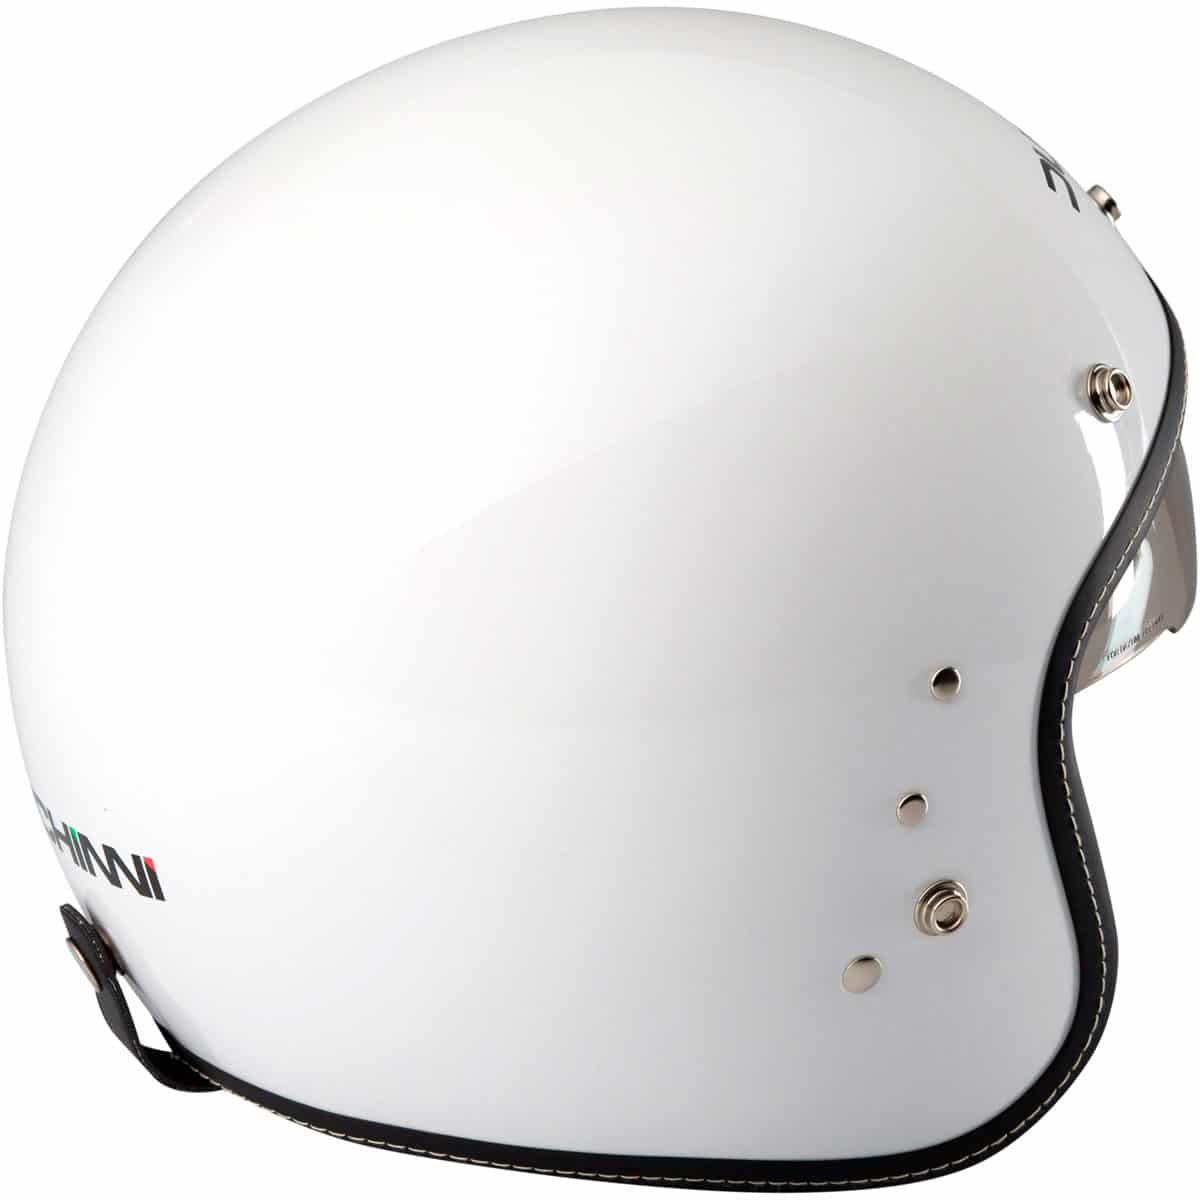 Duchinni D501 Open Face Motorbike Helmet - White 4